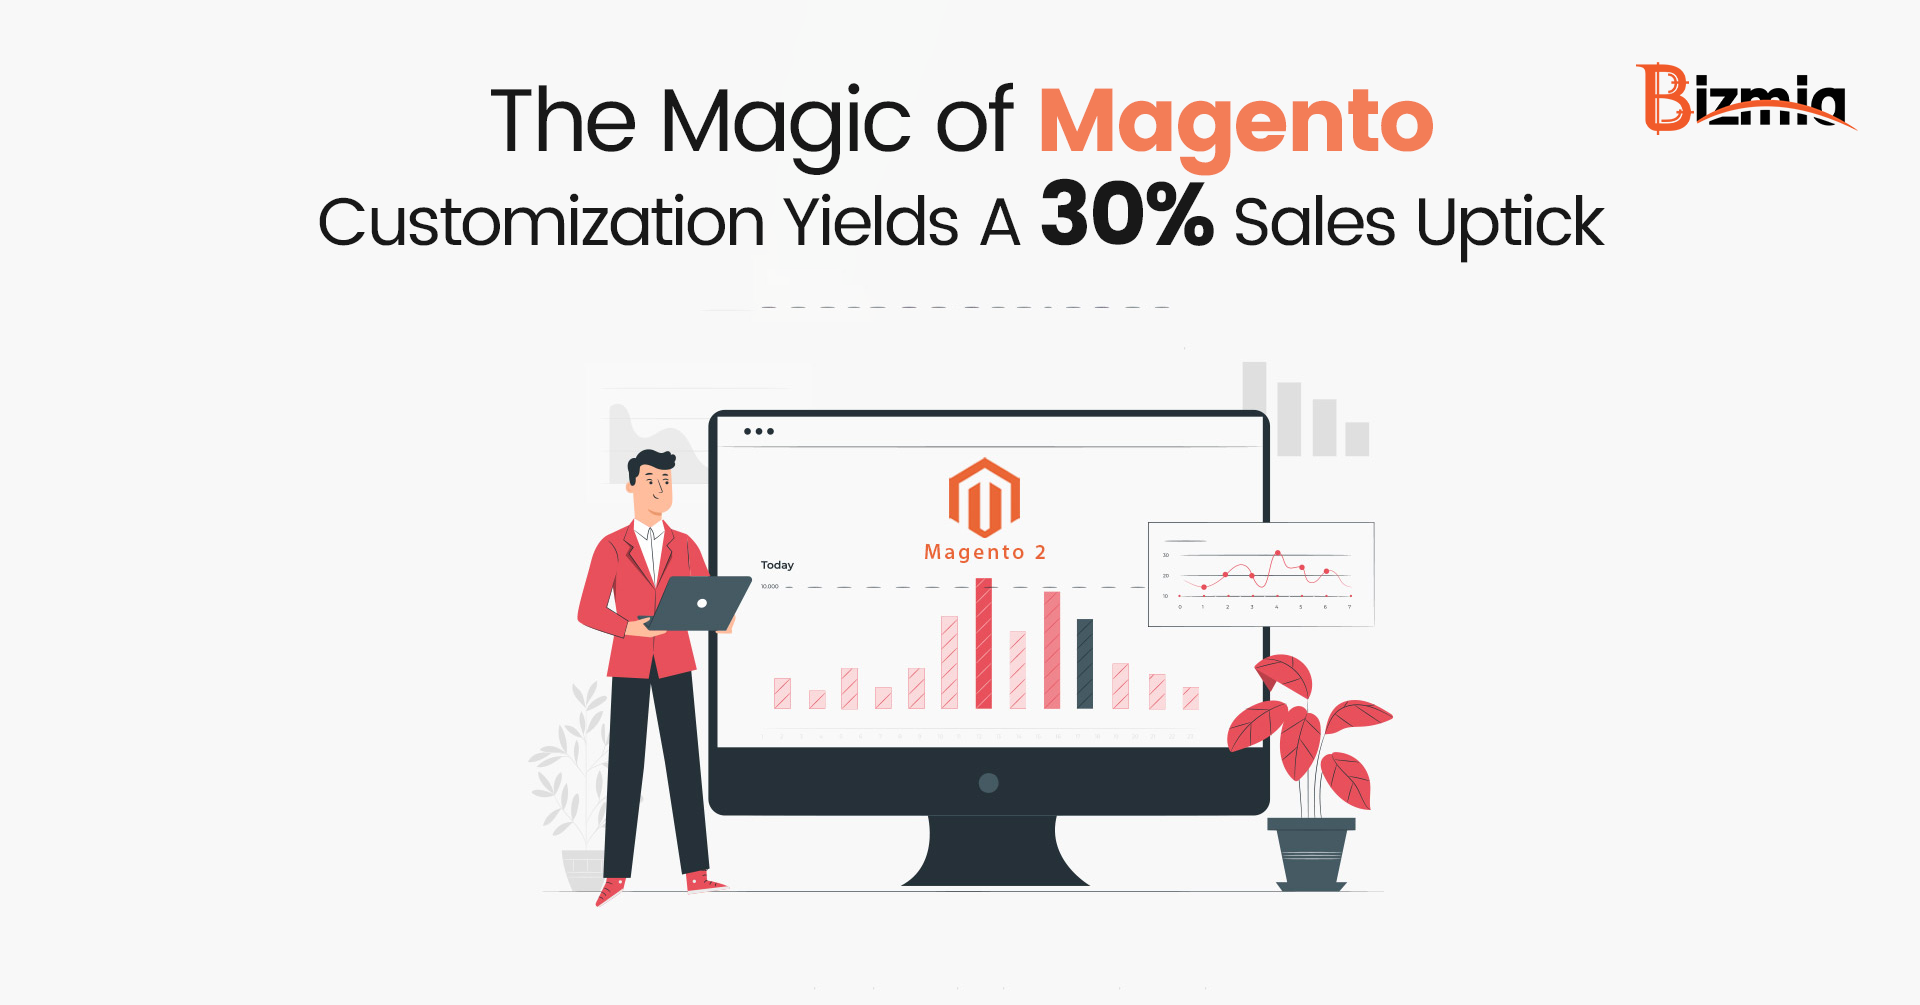 The magic of Magento Customization yields